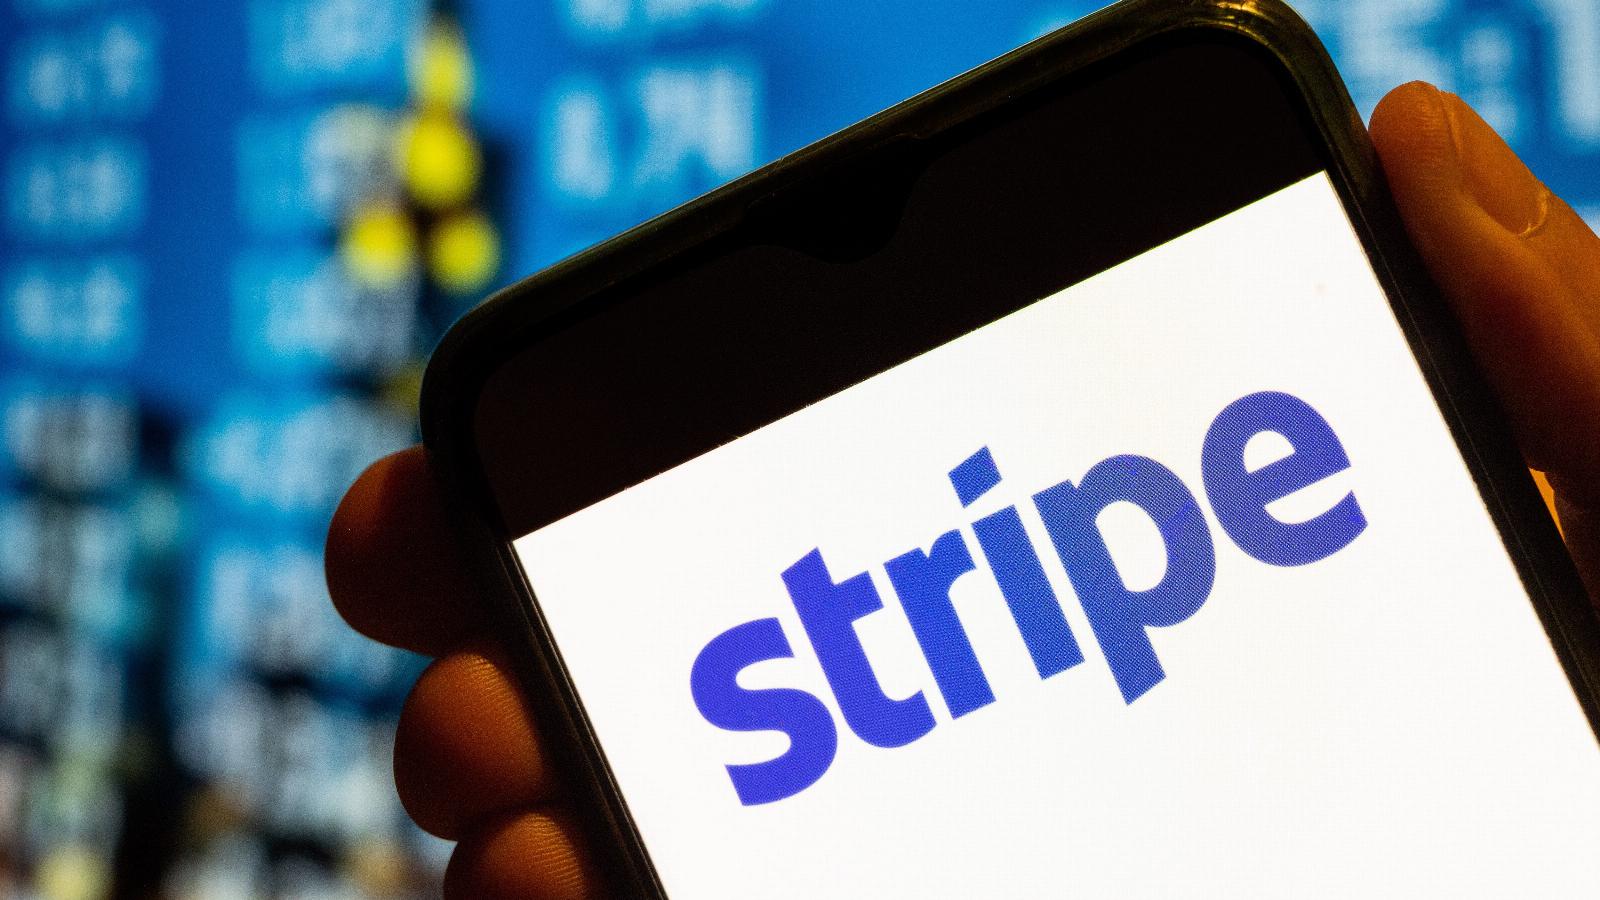 Stripe’s internal valuation gets cut to $63 billion